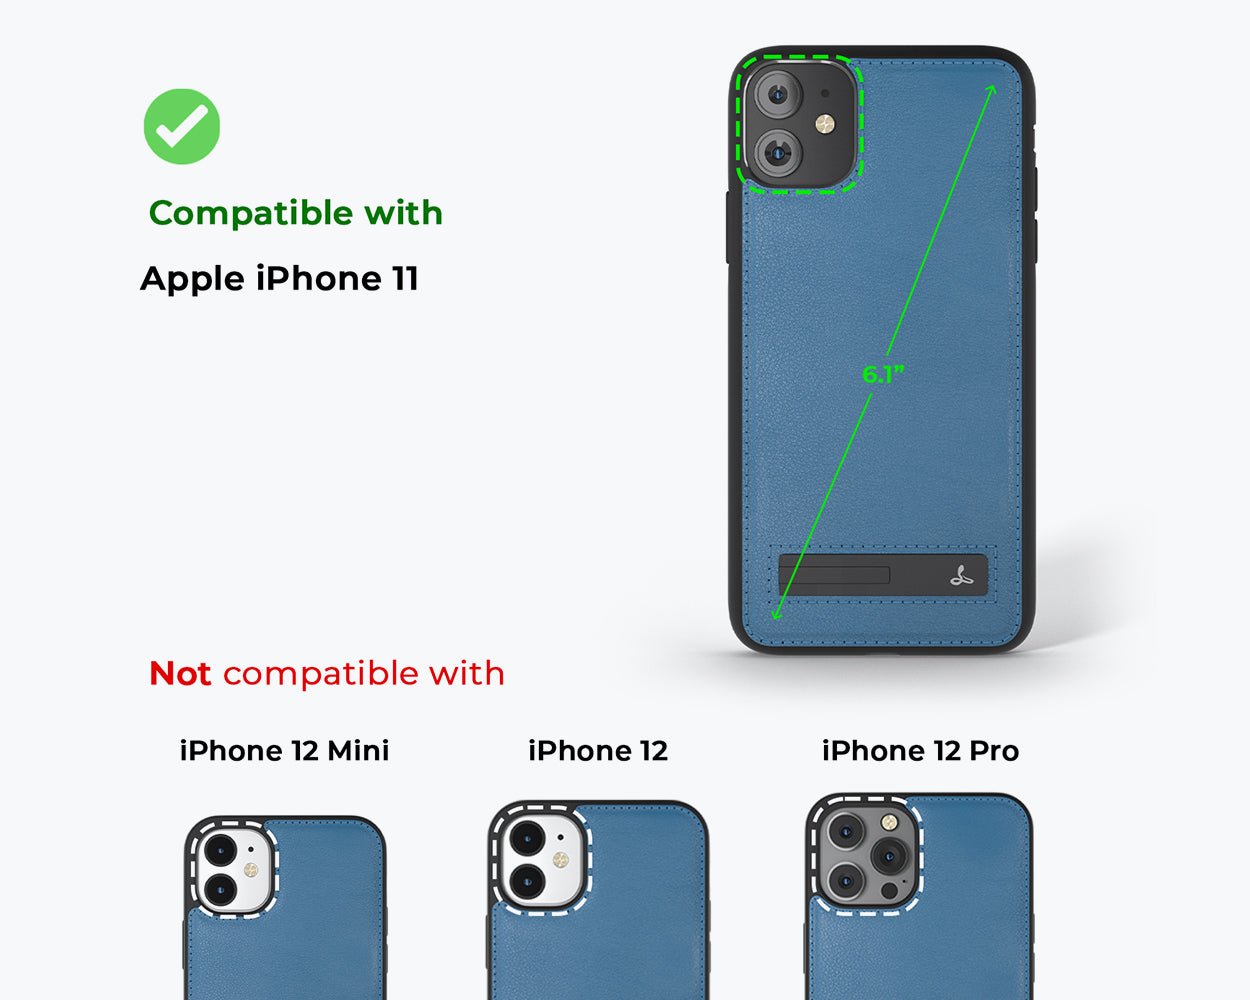 Metro Leather Case - Apple iPhone 11 / iPhone XR Pebble Grey Apple iPhone 11 - Snakehive UK